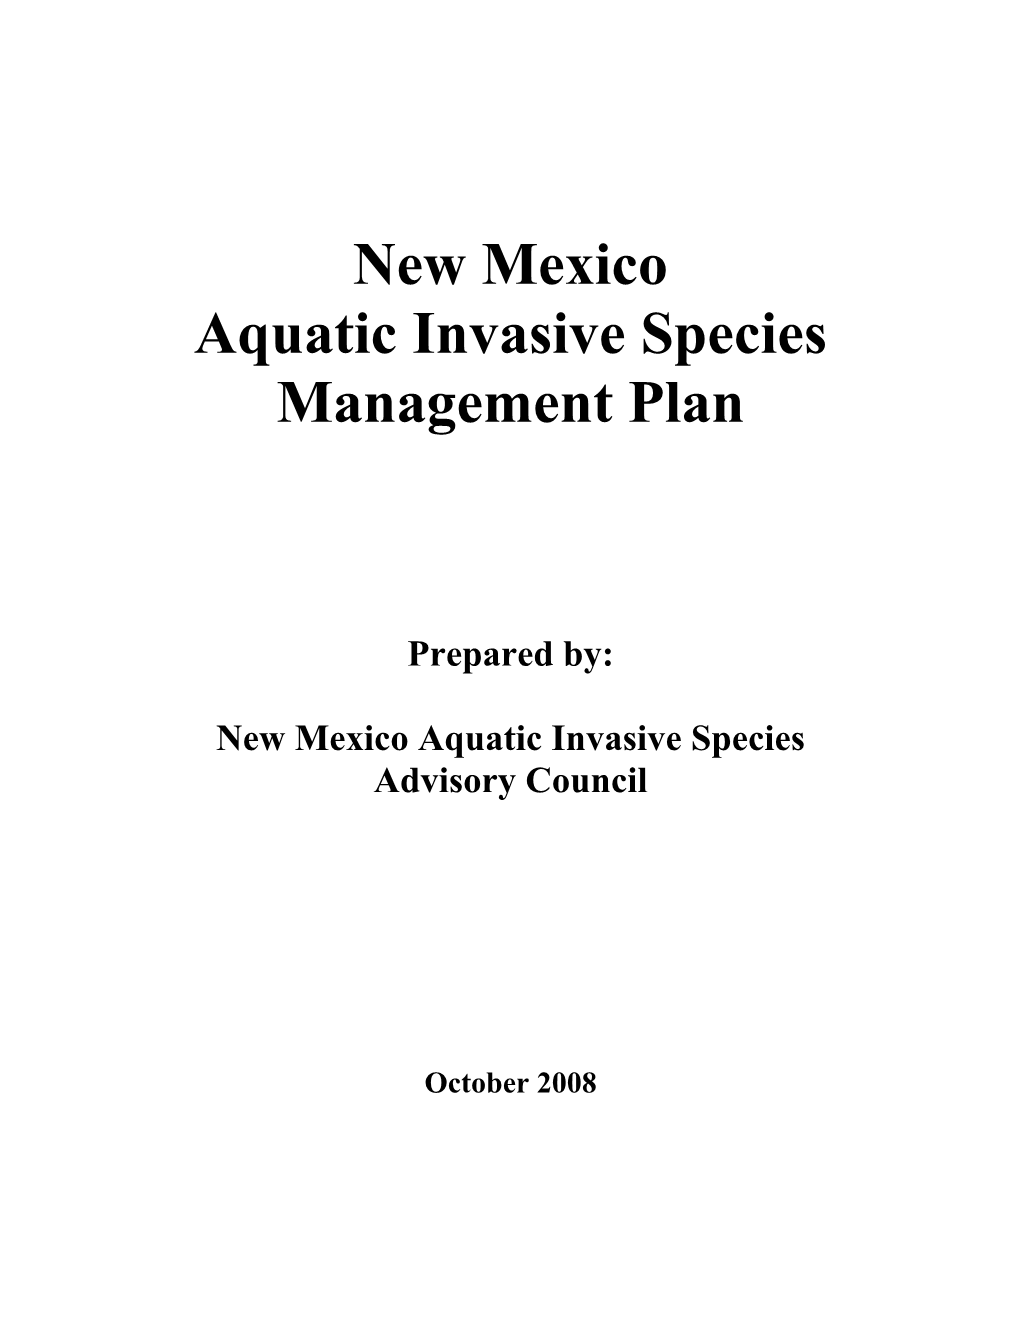 New Mexico Aquatic Invasive Species Management Plan